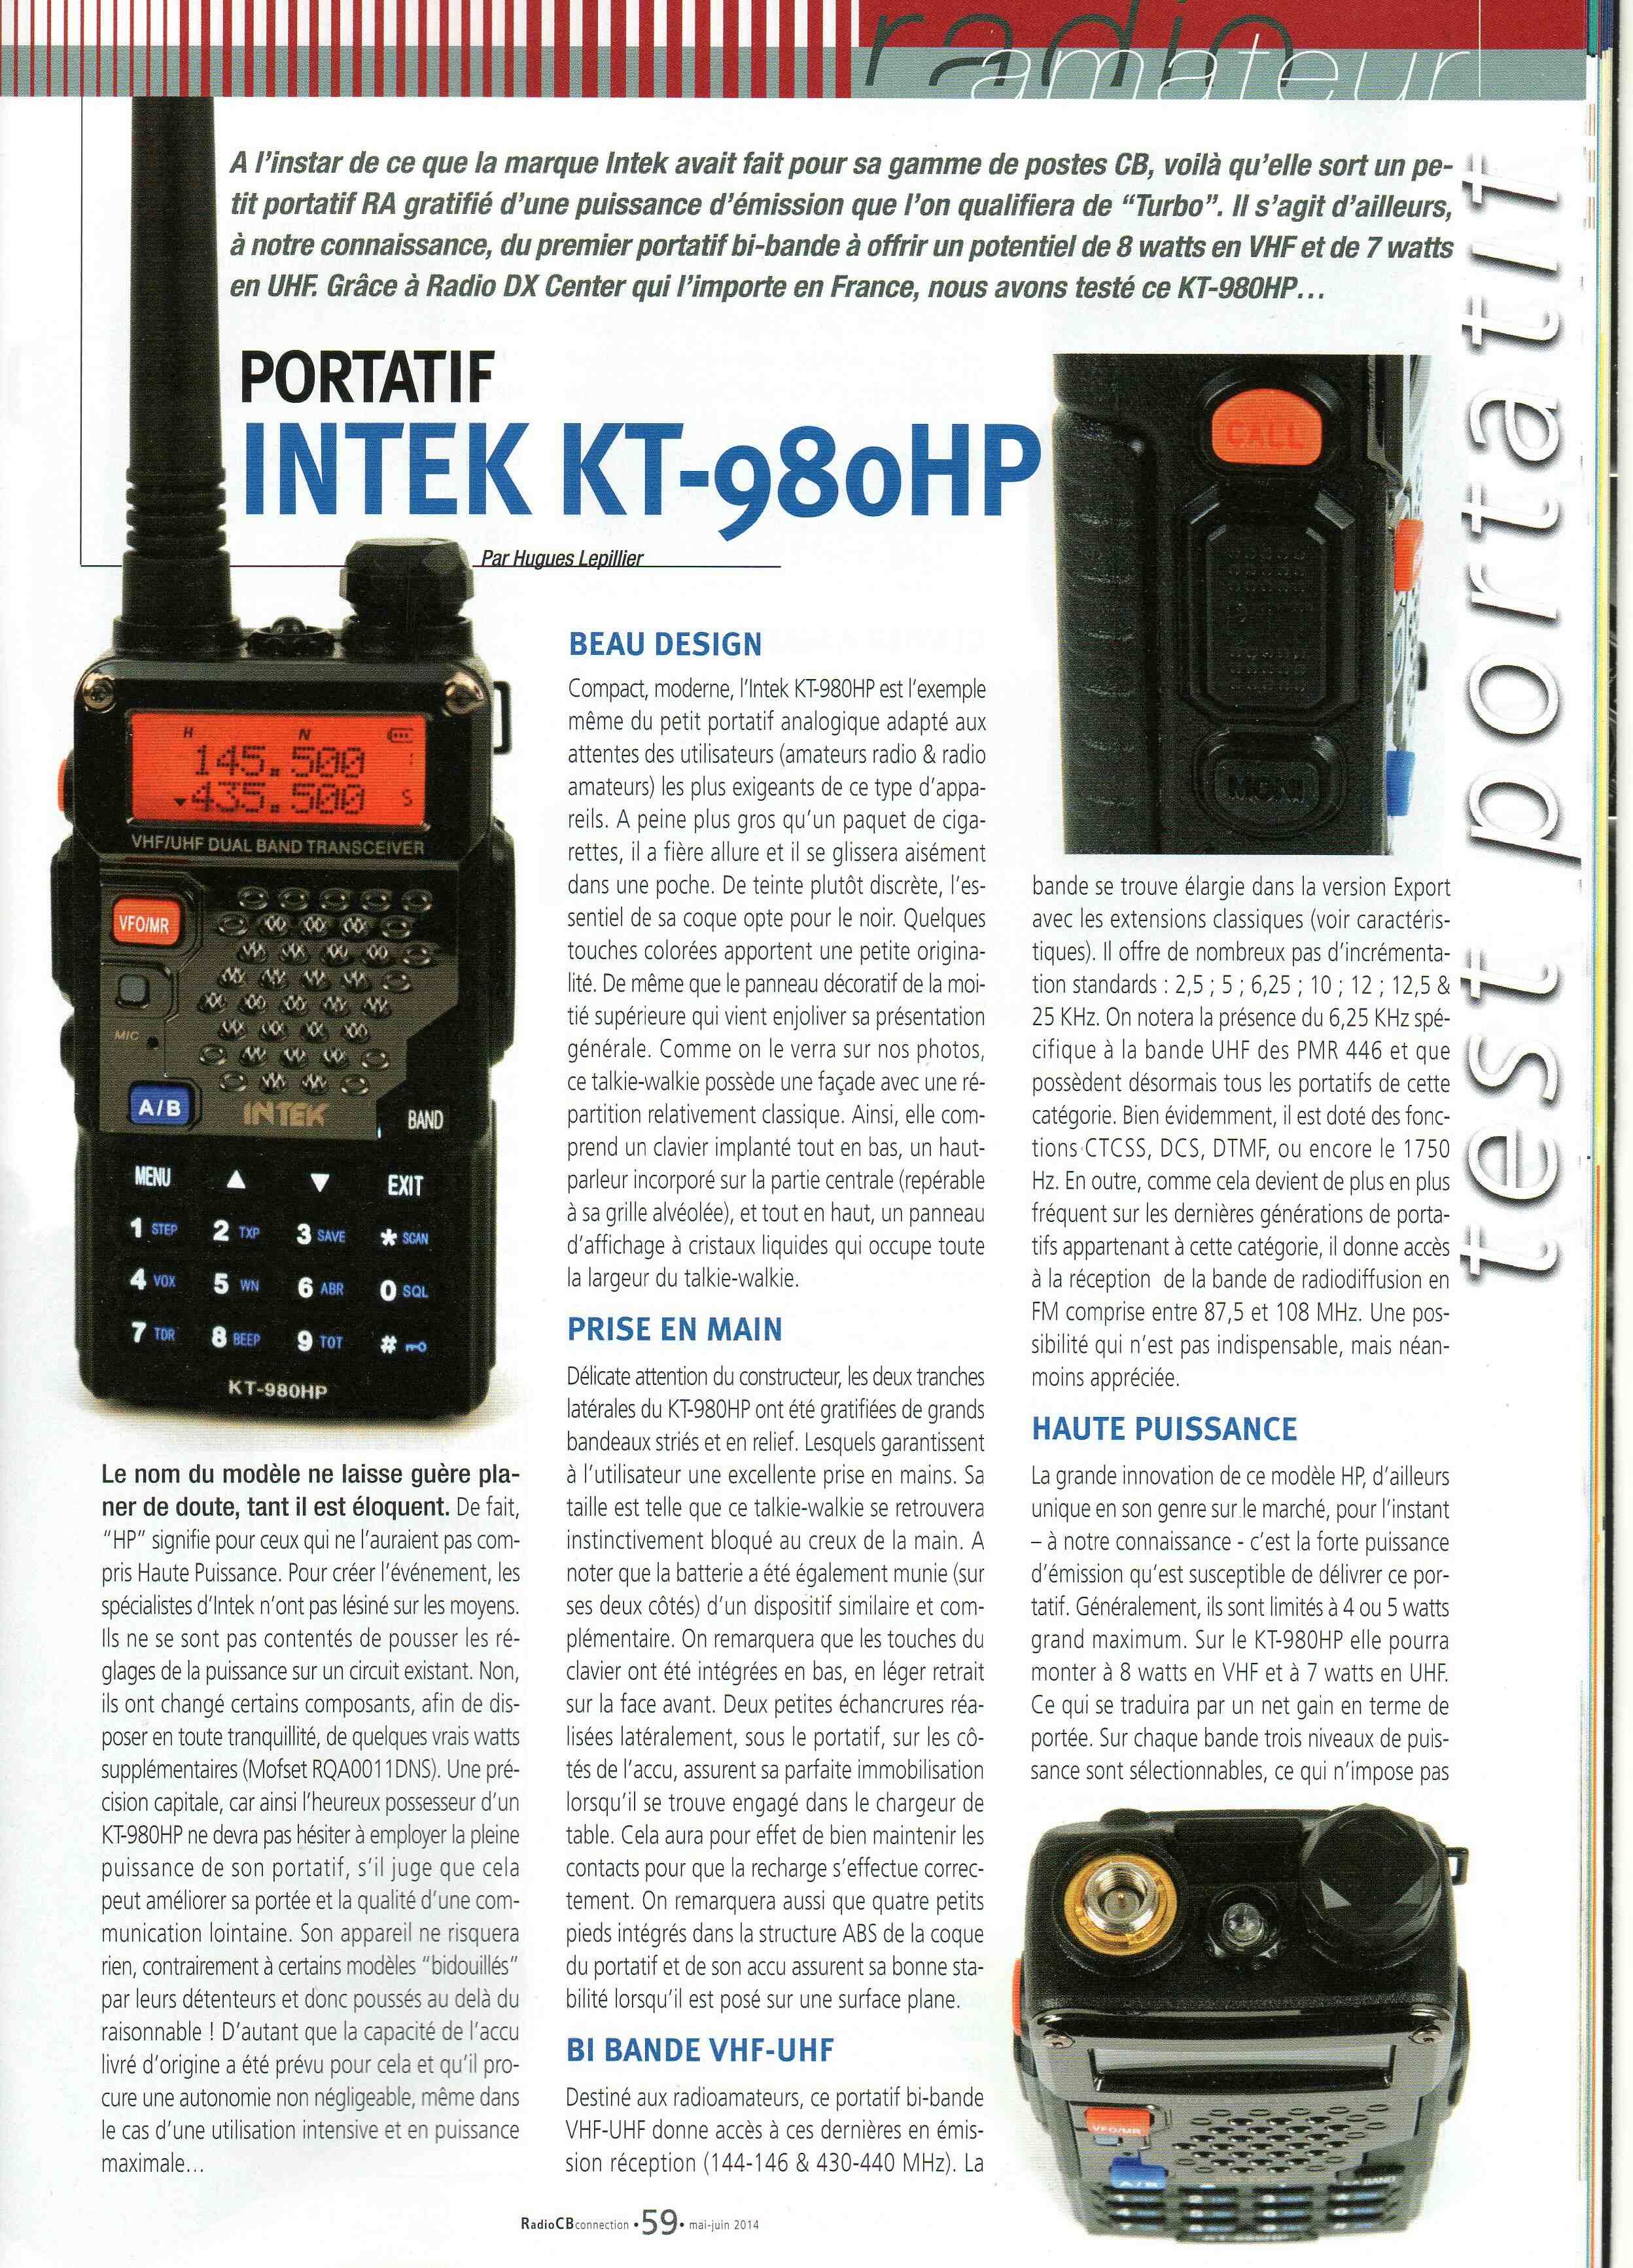 intek - Intek KT-980HP (Portable) Img94410